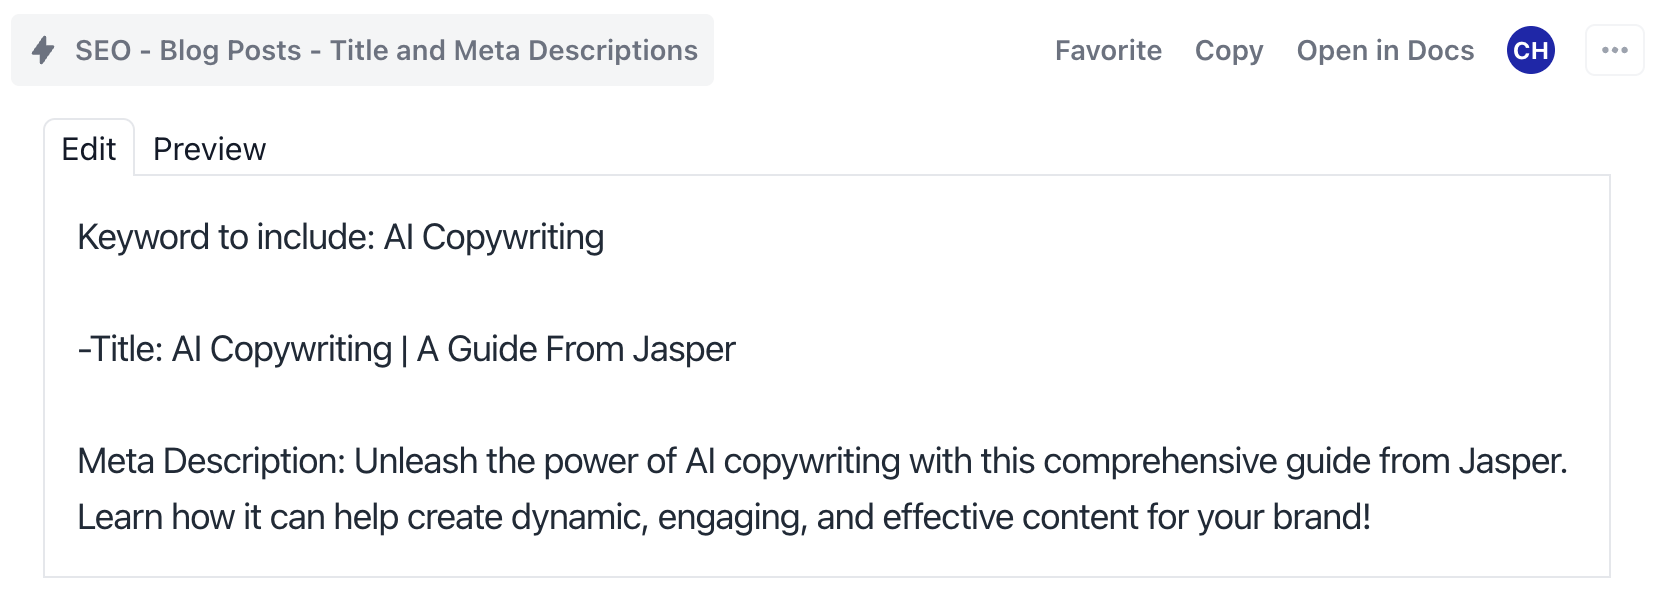 Jasper's copywriting output example 
